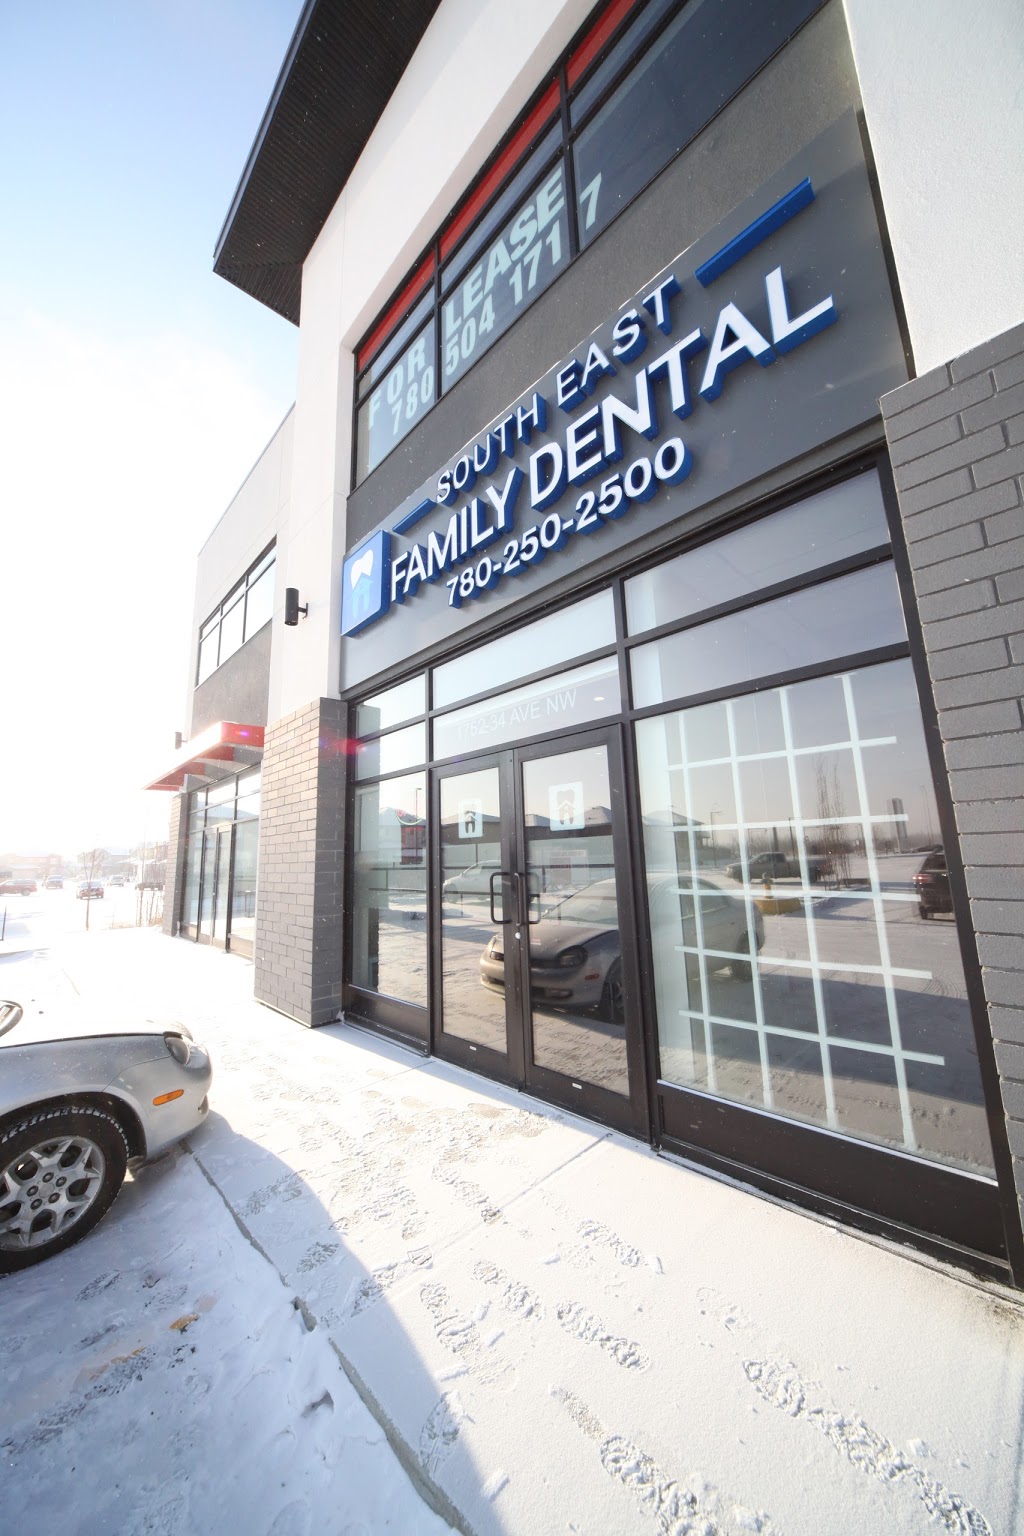 South East Family Dental | dentist | 1752 34 Ave., Edmonton, AB T6T 1B1, Canada | 7802502500 OR +1 780-250-2500